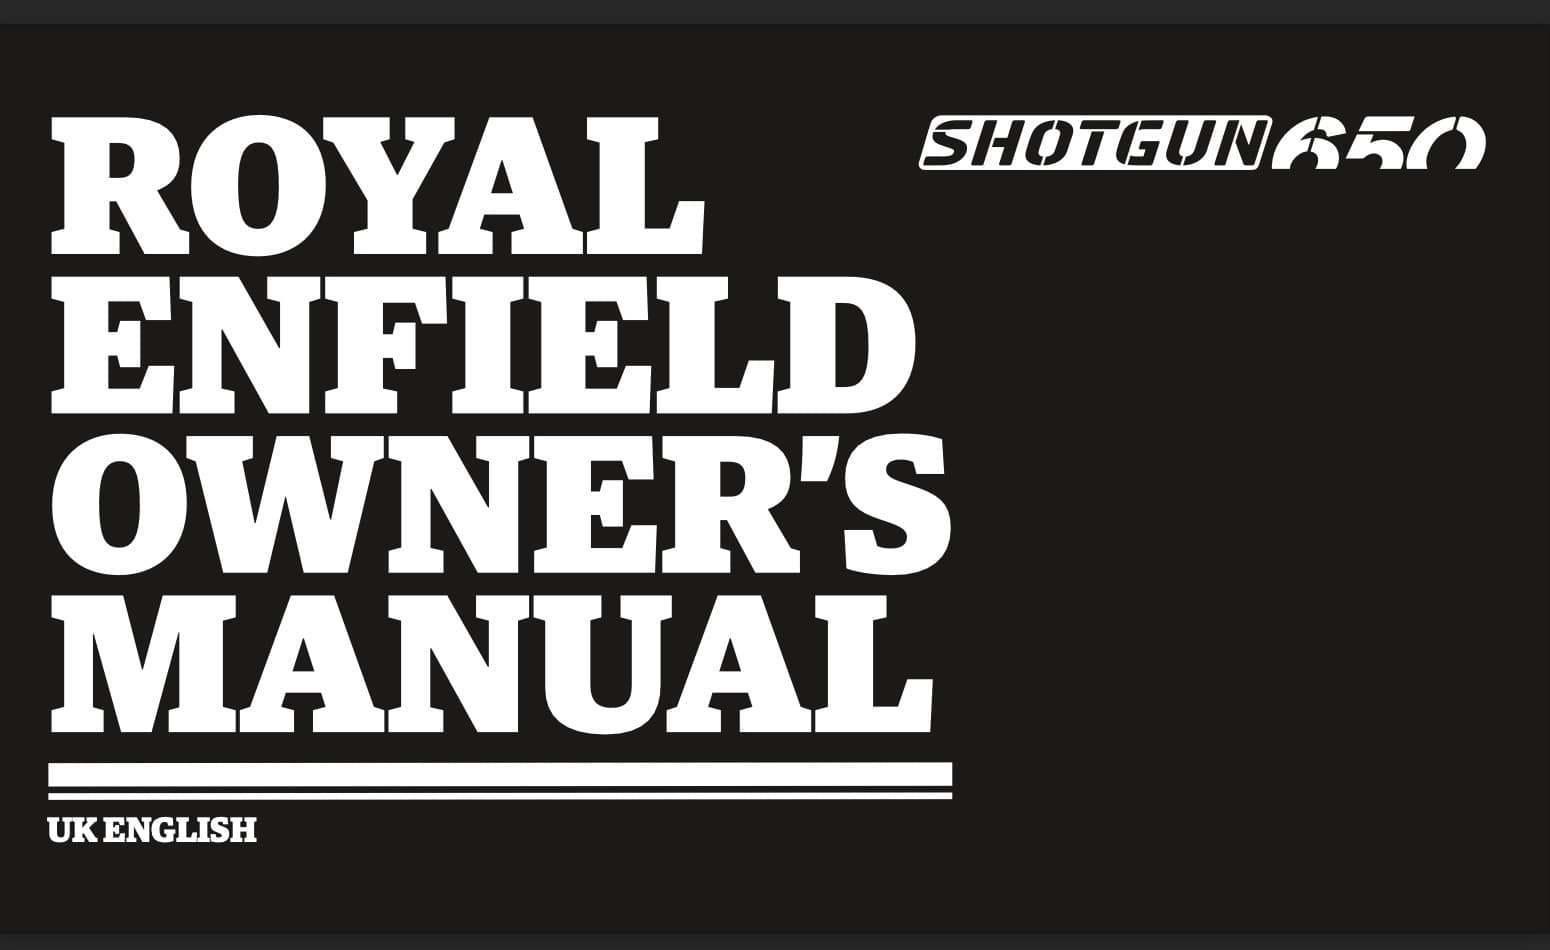 Royal Enfield Shotgun 650 owner's manual maintenance schedule screenshot 1